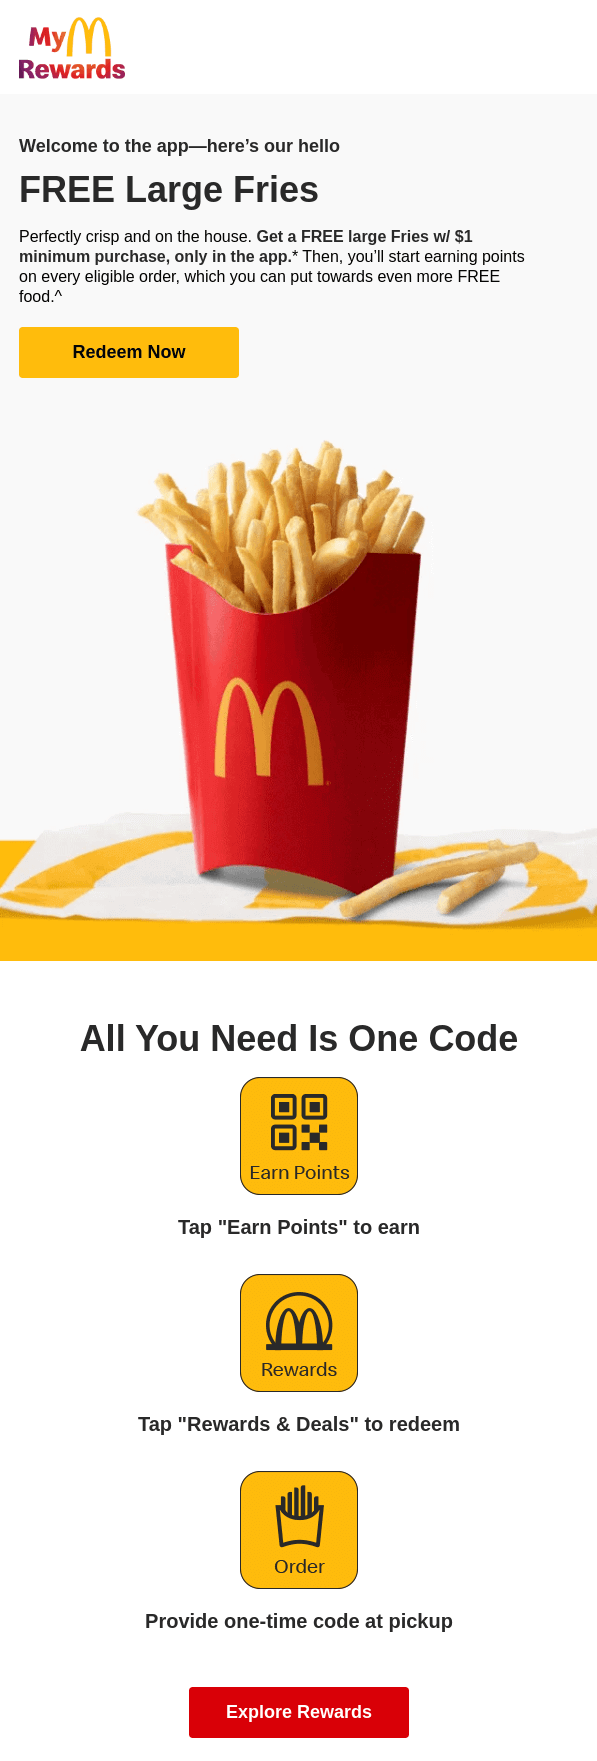 McDonalds_customer_rewards_email_example